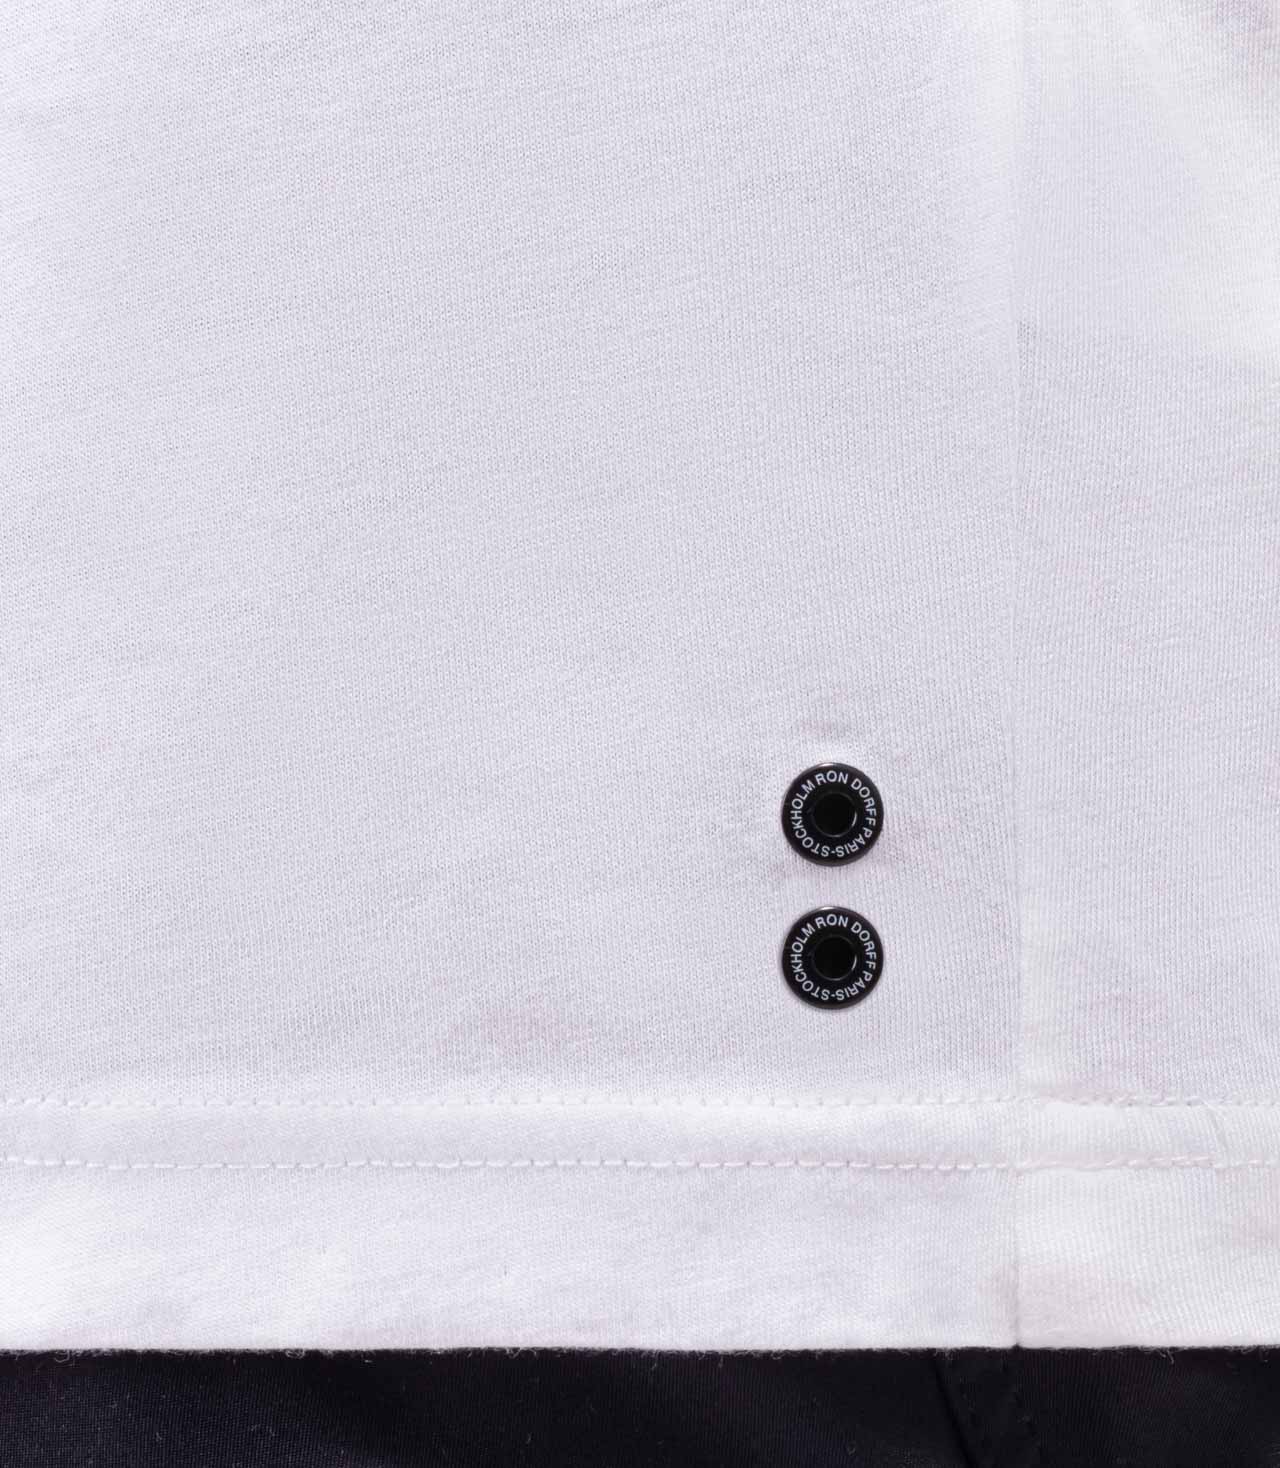 Cotton Modal T-Shirt w Chest Pocket: White